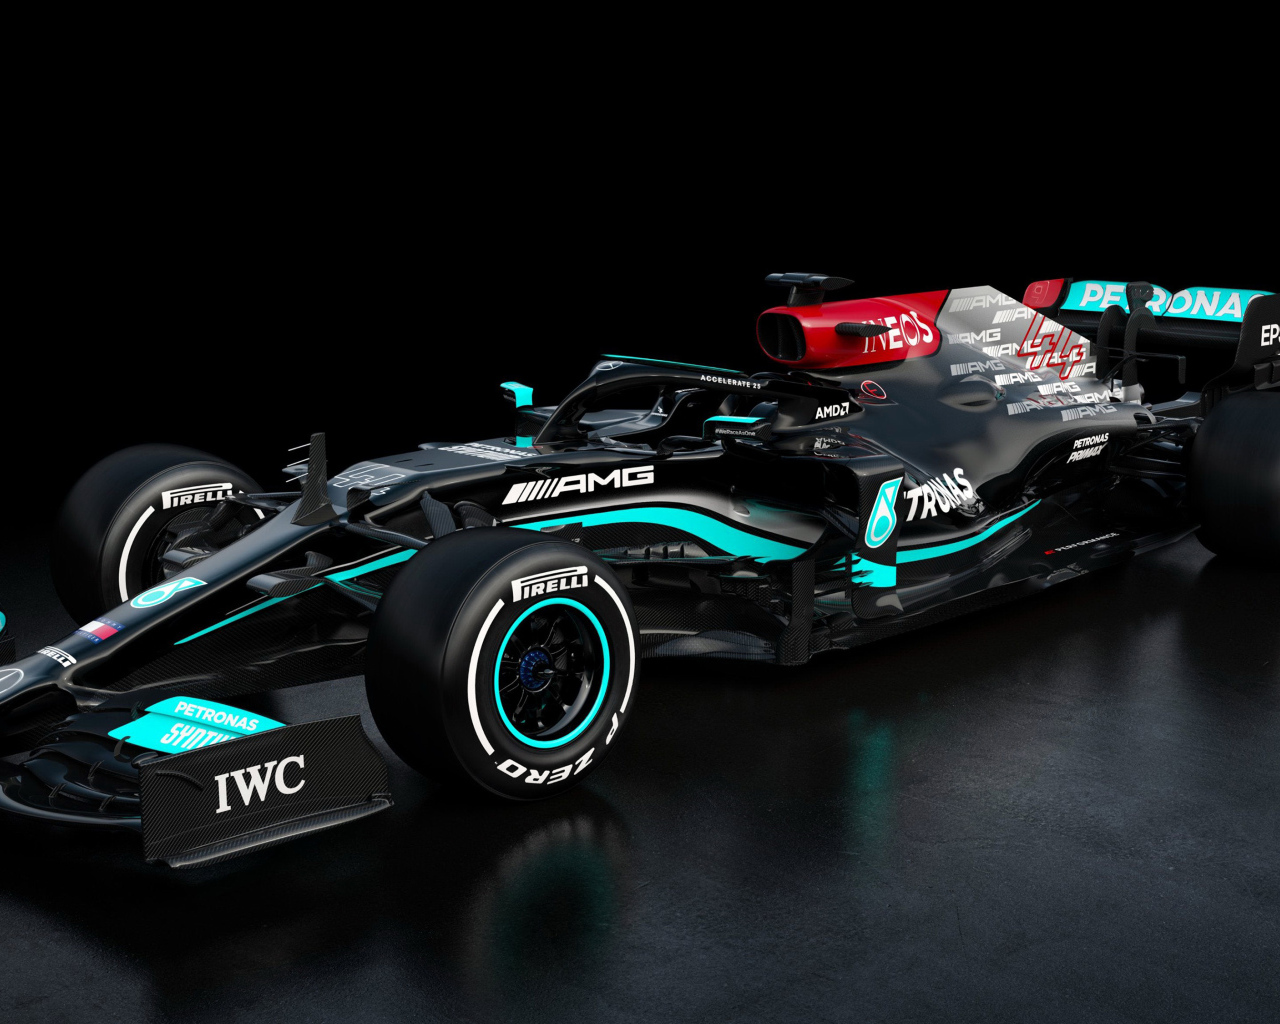 2021 Mercedes-AMG F1 W12 E Performance Race Car Against Black Background